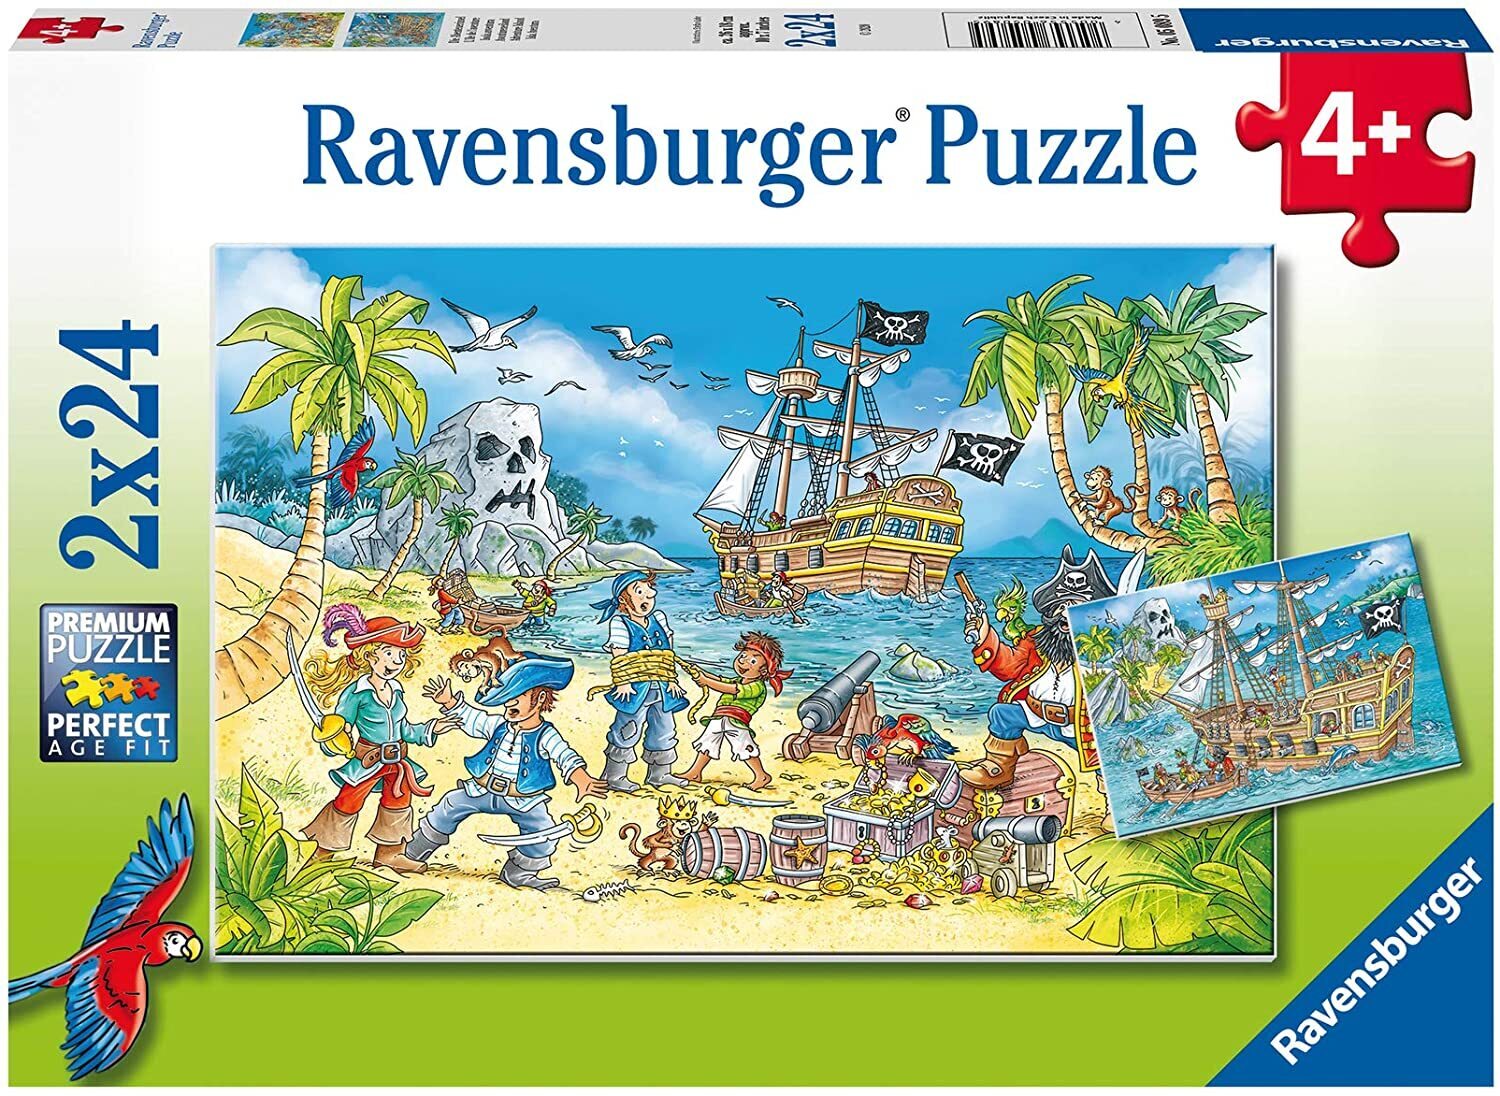 Ravensburger Adventure Island 2 x 24 piece puzzles box